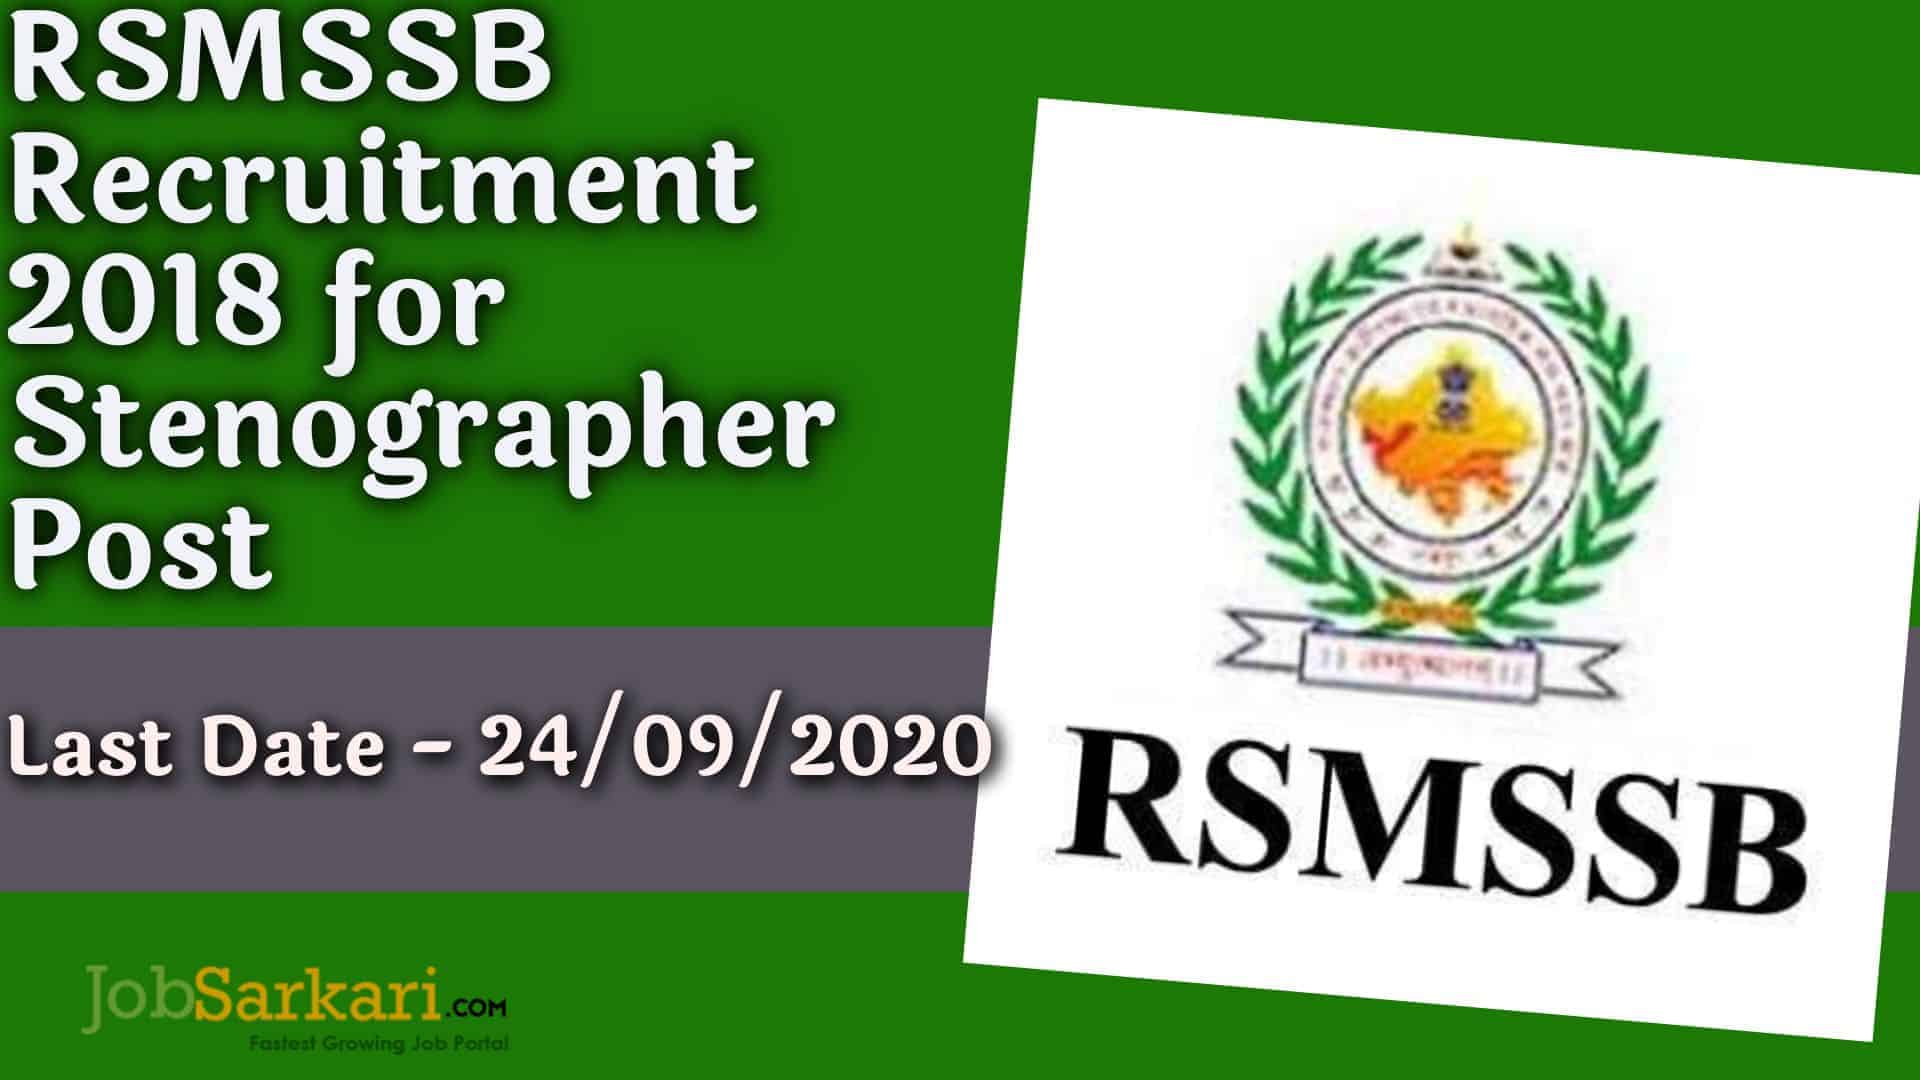 RSMSSB Recruitment 2018 for Stenographer Post